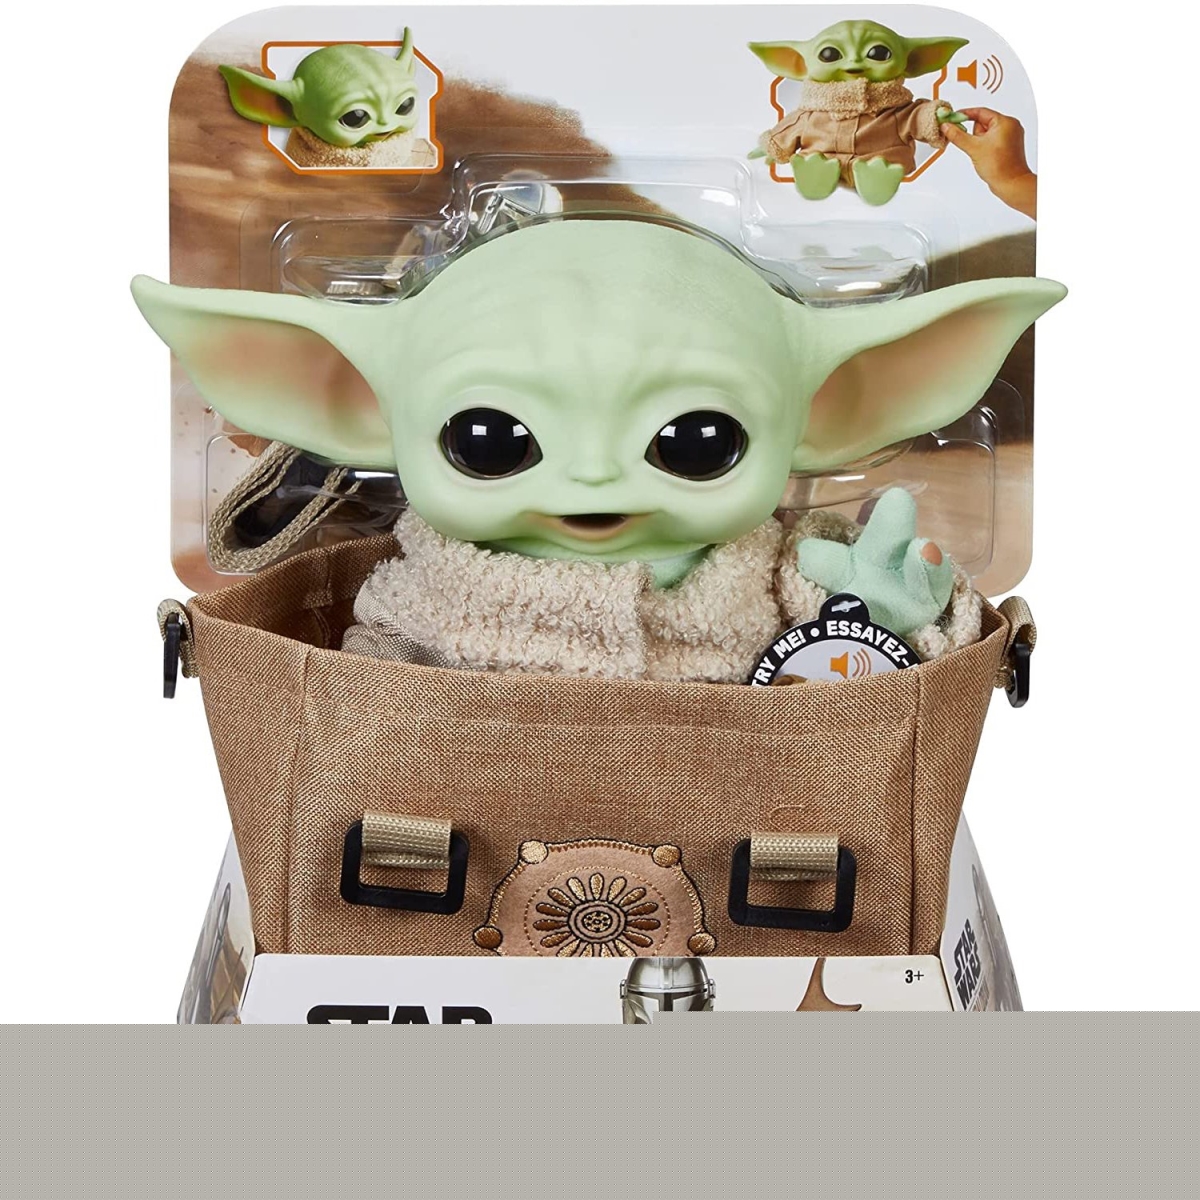 Picture of Mattel 30383675 Star Wars The Mandalorian The Child Premium Bundle Talking Plush Toy